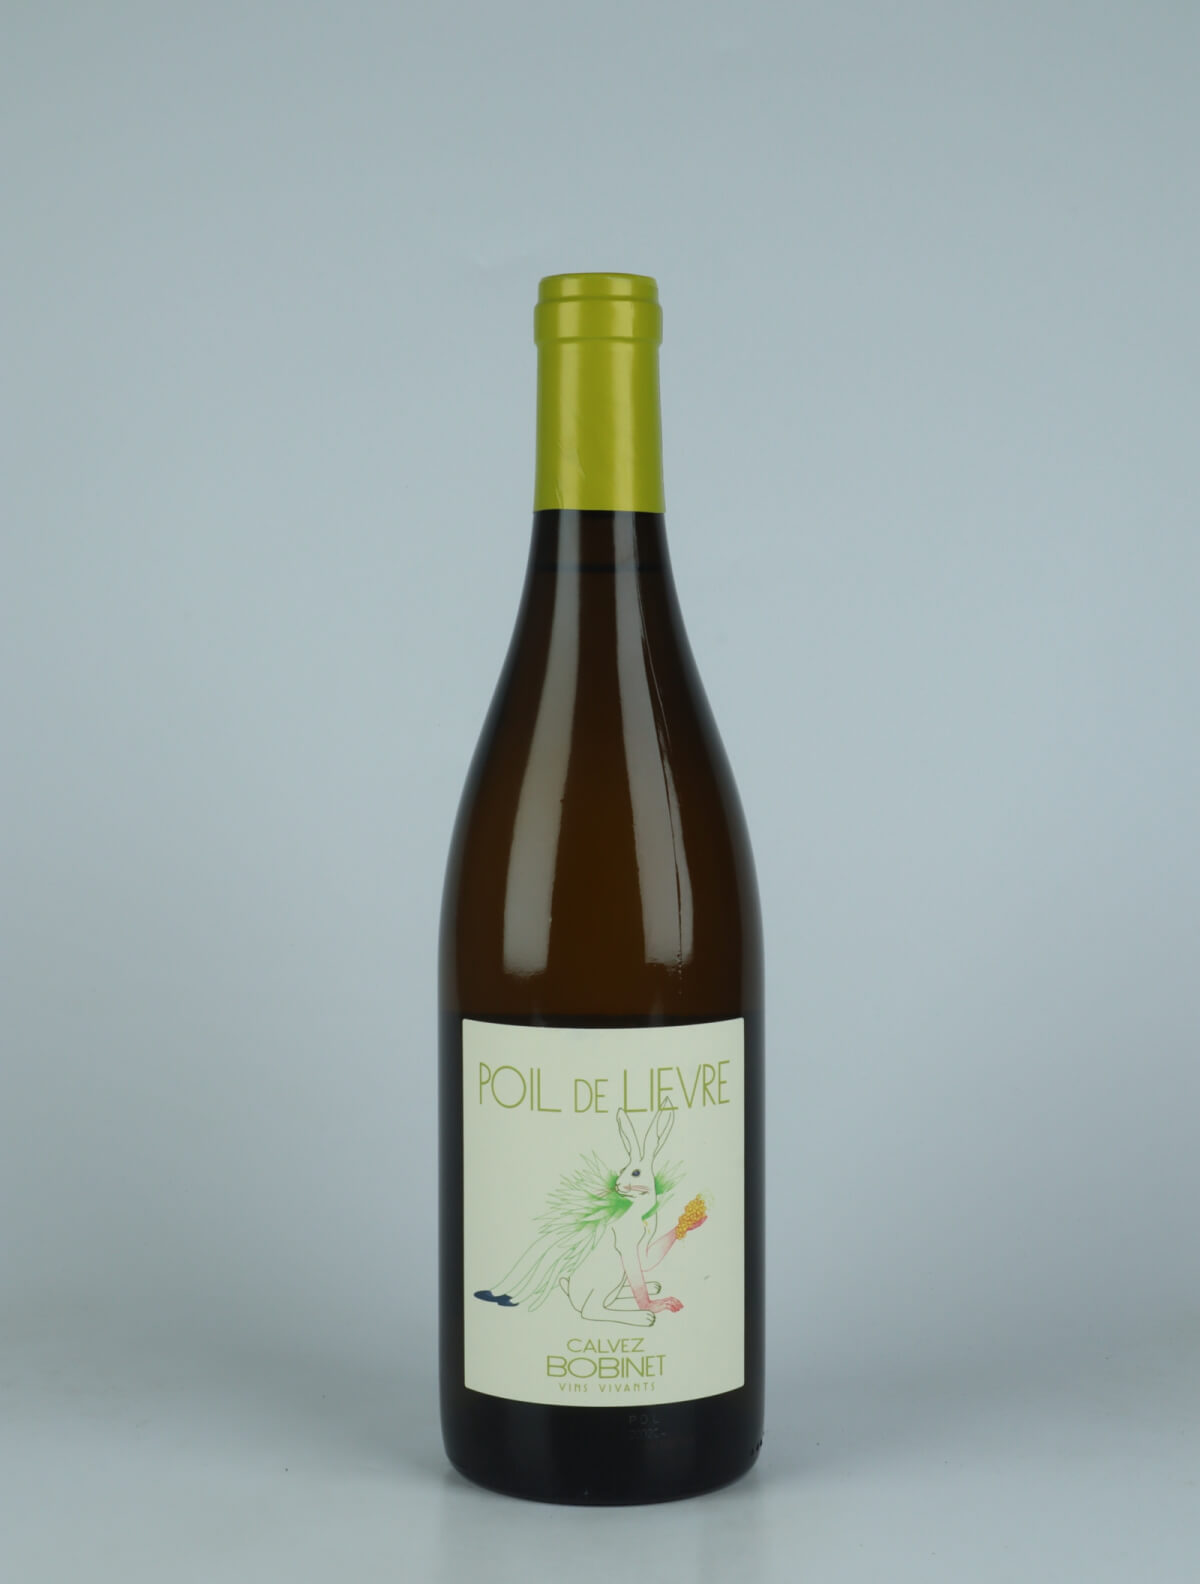 A bottle 2023 Poil de Lièvre White wine from Domaine Bobinet, Loire in France